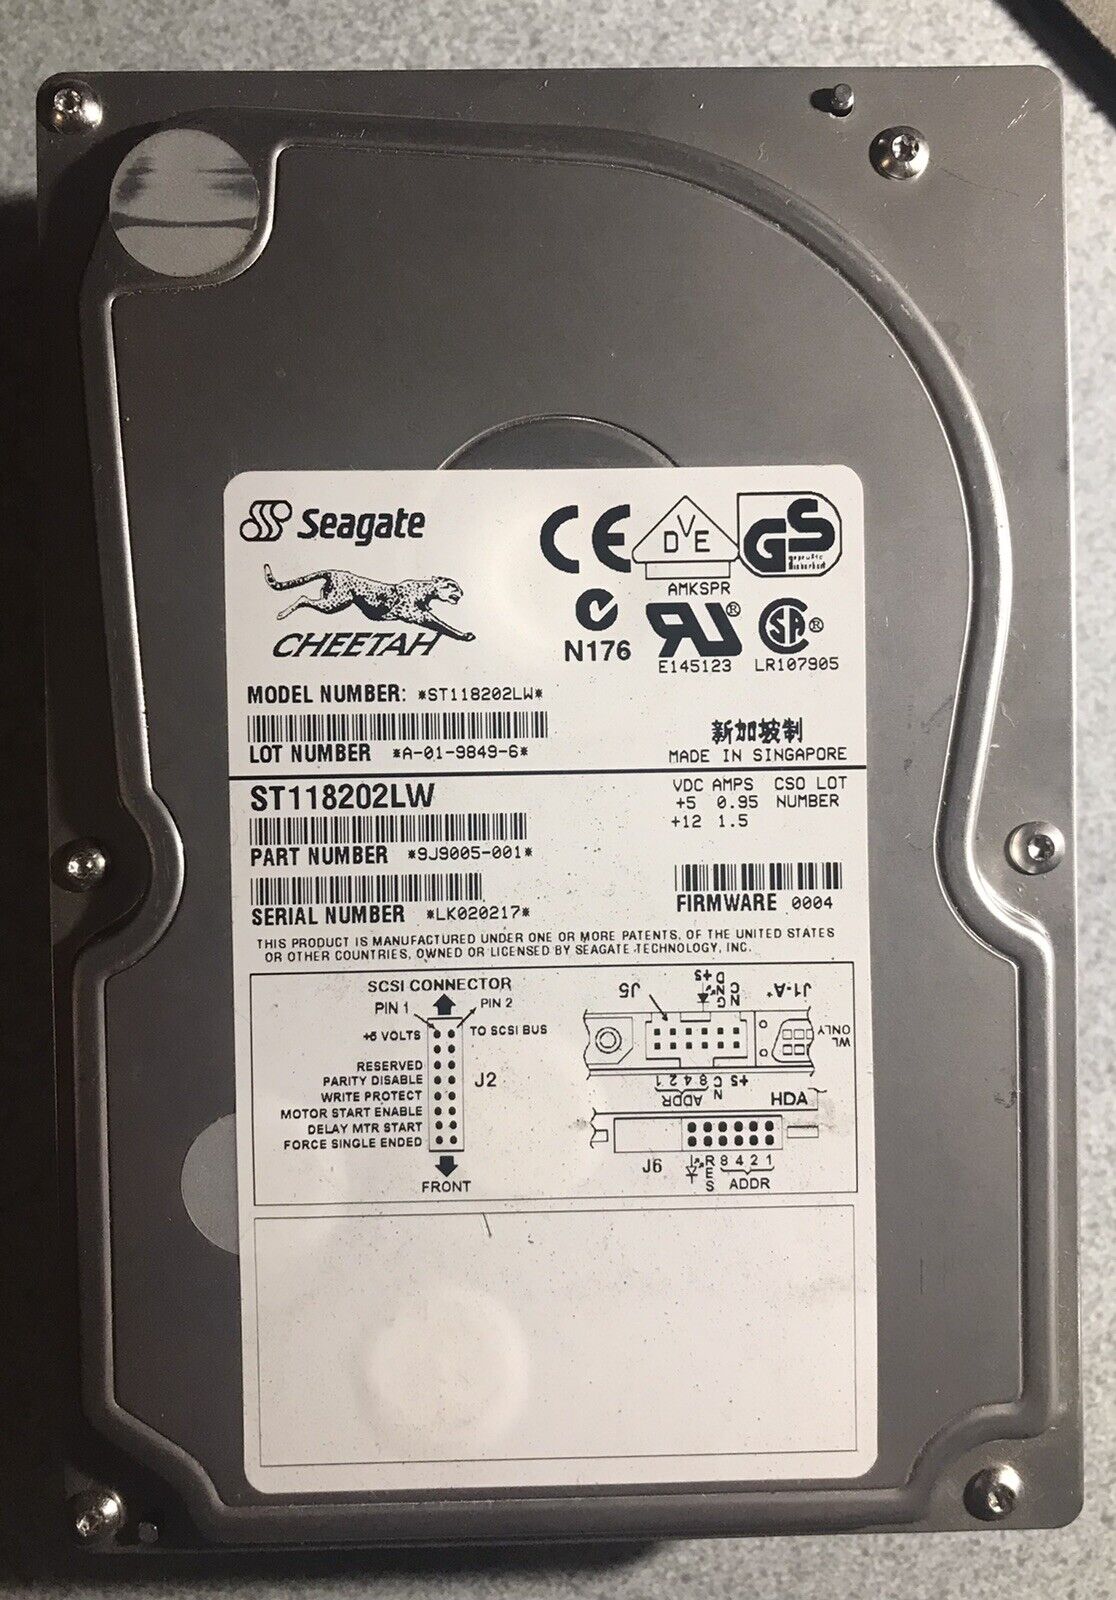 Seagate Cheetah ST118202LW 3.5” SCSI hard drive